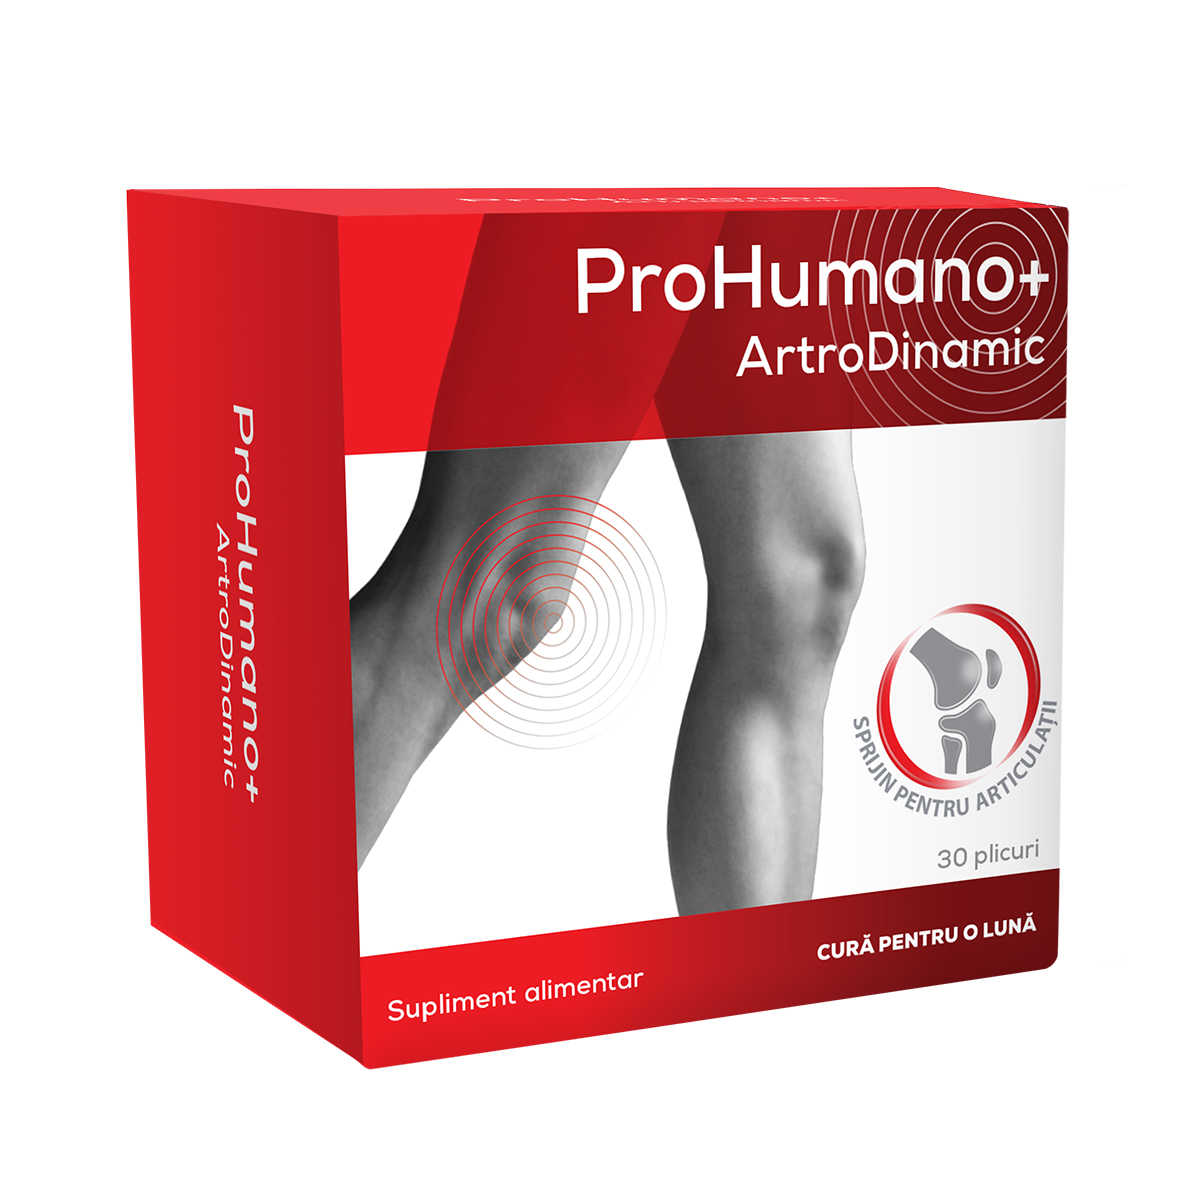 ArtroDinamic Prohumano+ 30 plicuri